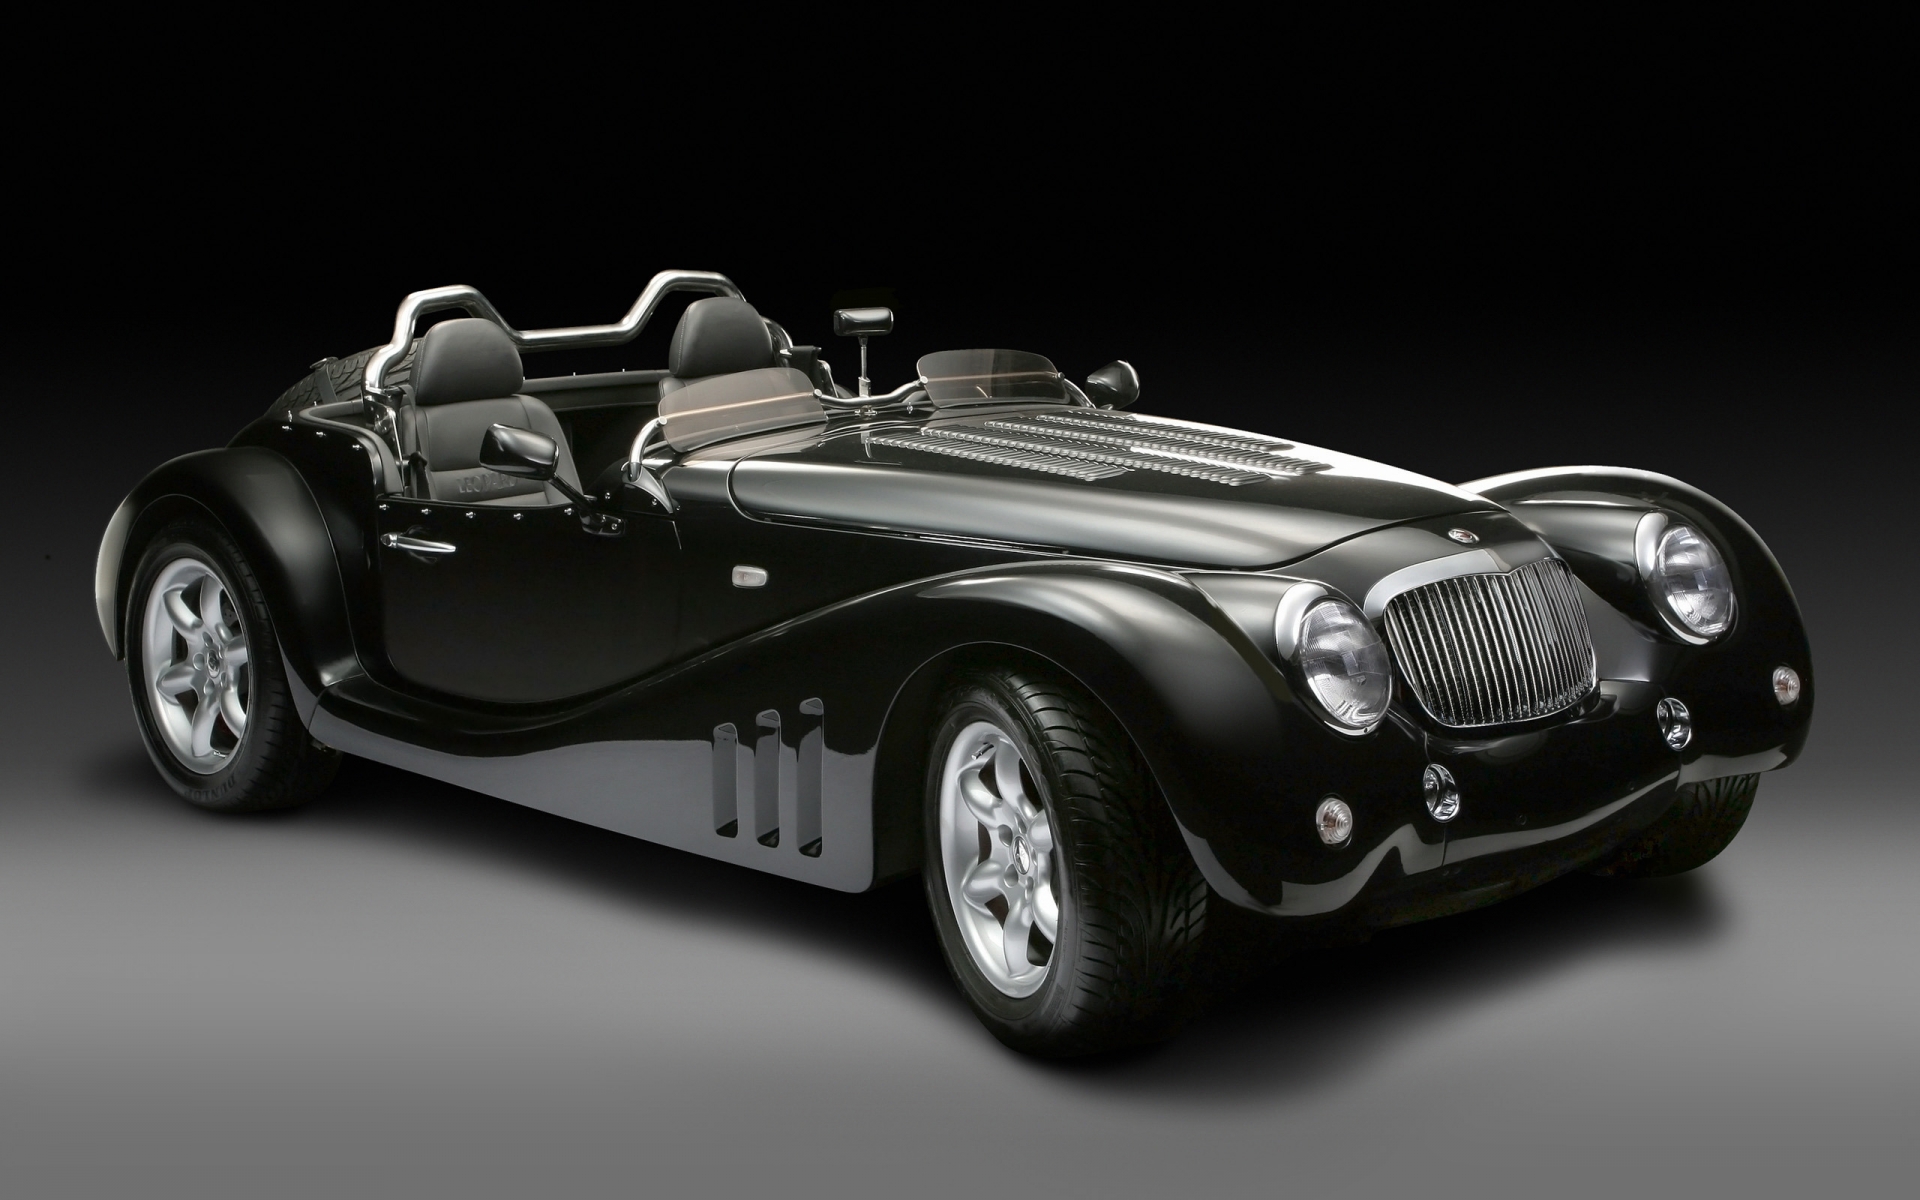 2013 Leopard Roadster Studio for 1920 x 1200 widescreen resolution